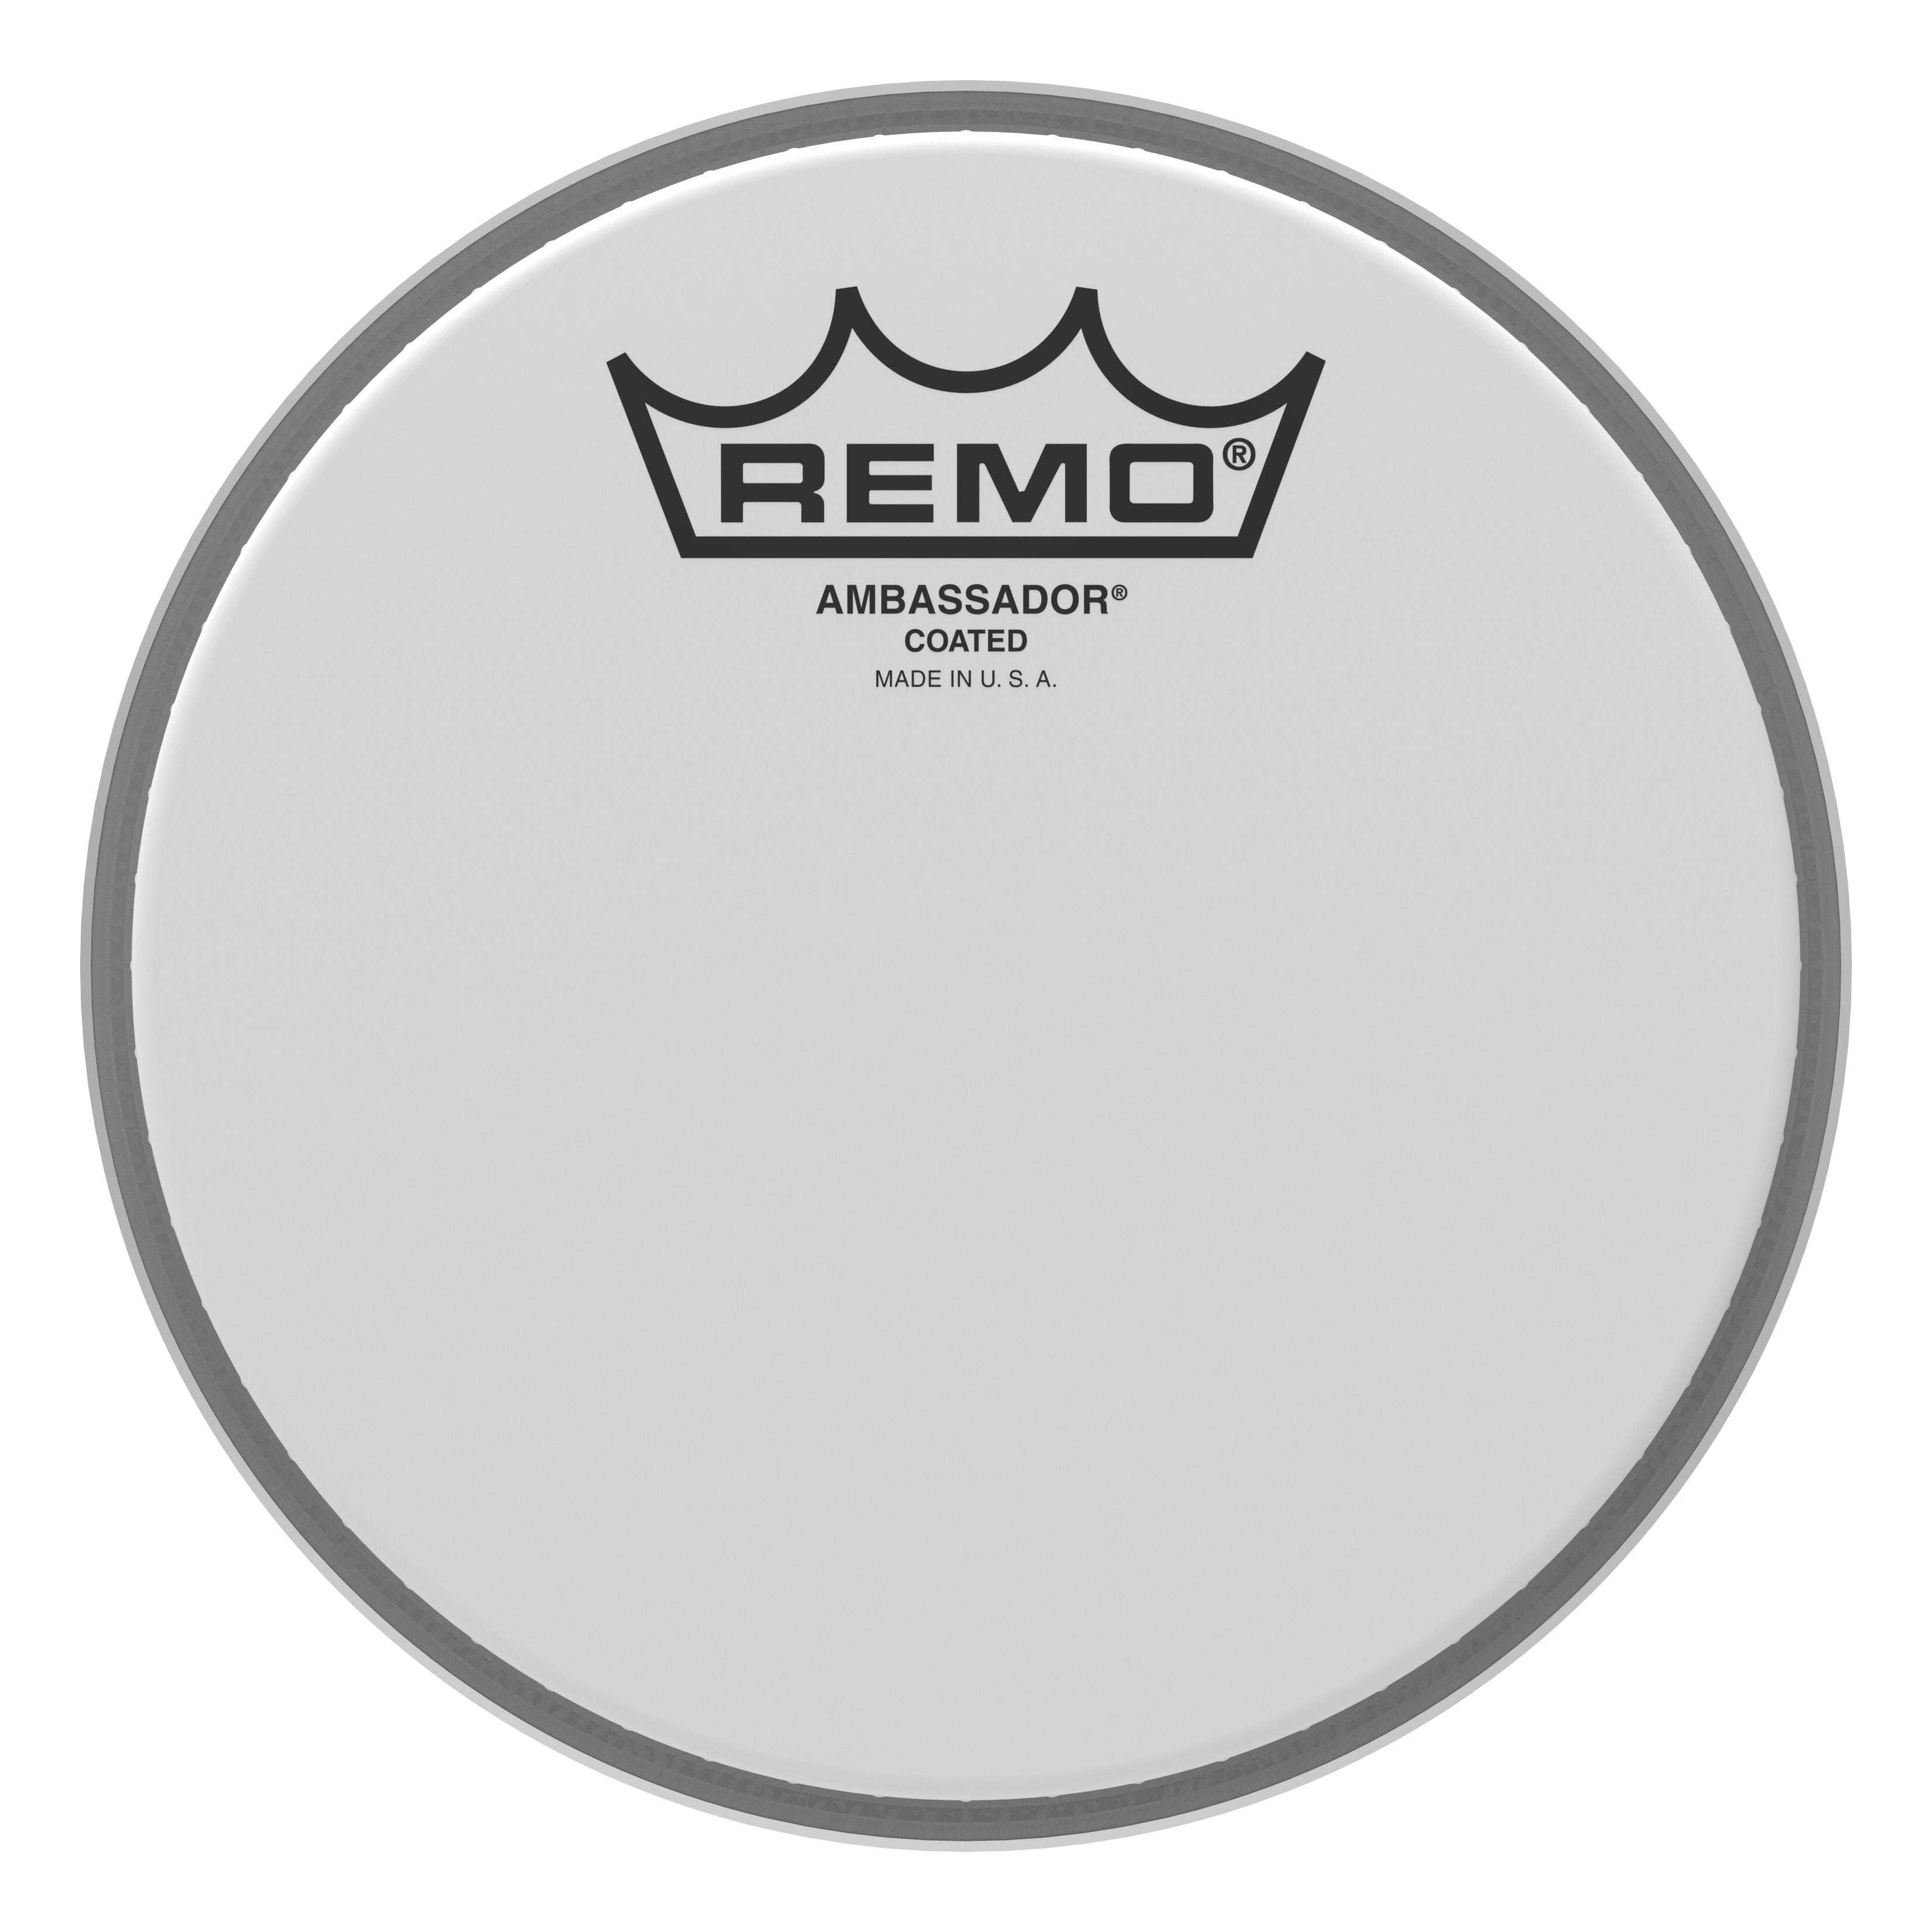 Remo 6" Coated Ambassador Drum Head (BA-0106-00) DRUM SKINS Remo 